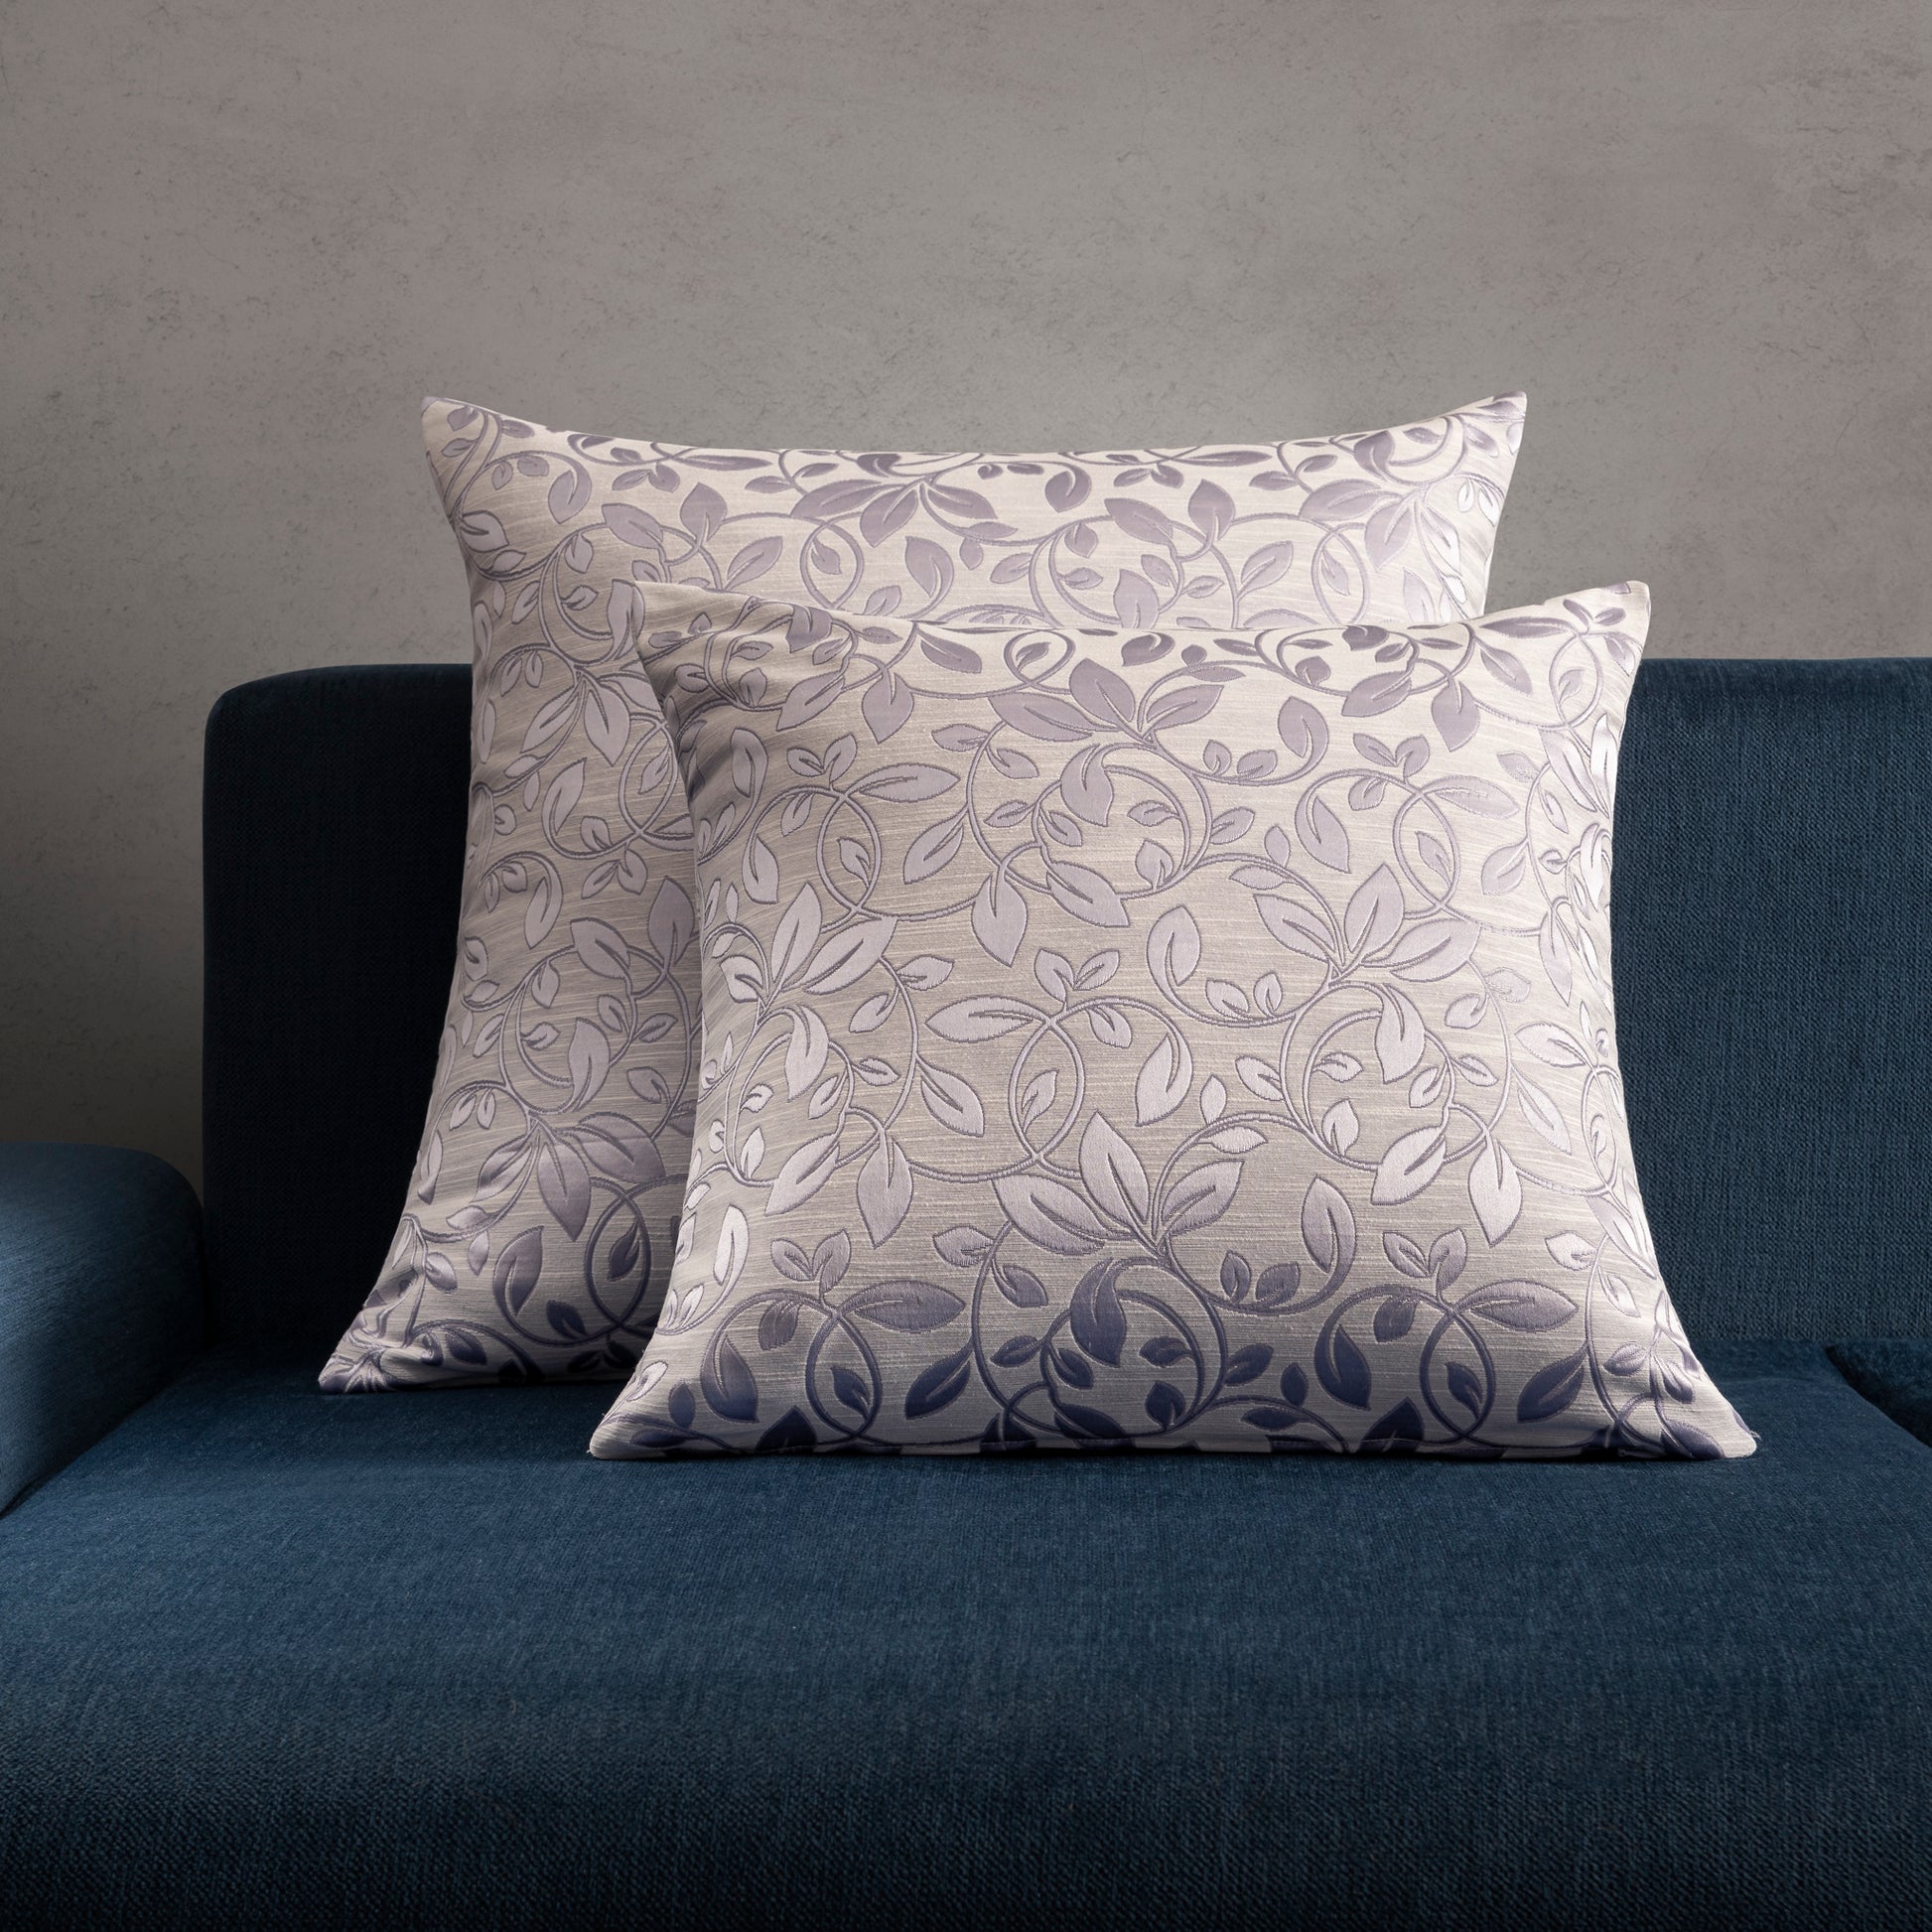 2 purple floral decorative pillow placed on a blue sofa